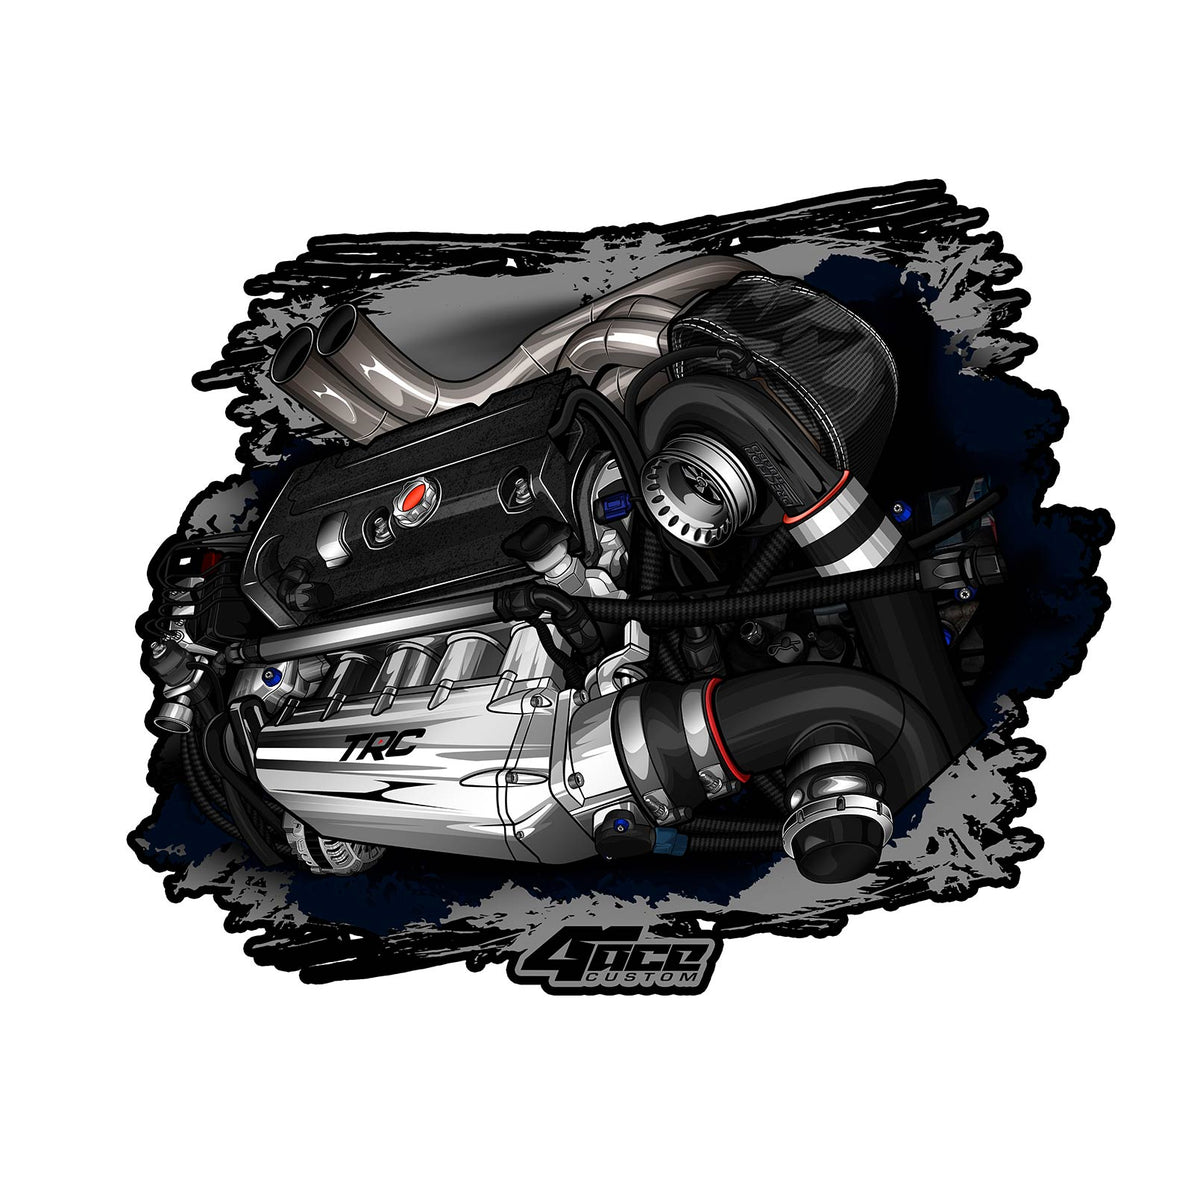 TRC Honda K24 Destroker Engine Sticker (100 Entries)